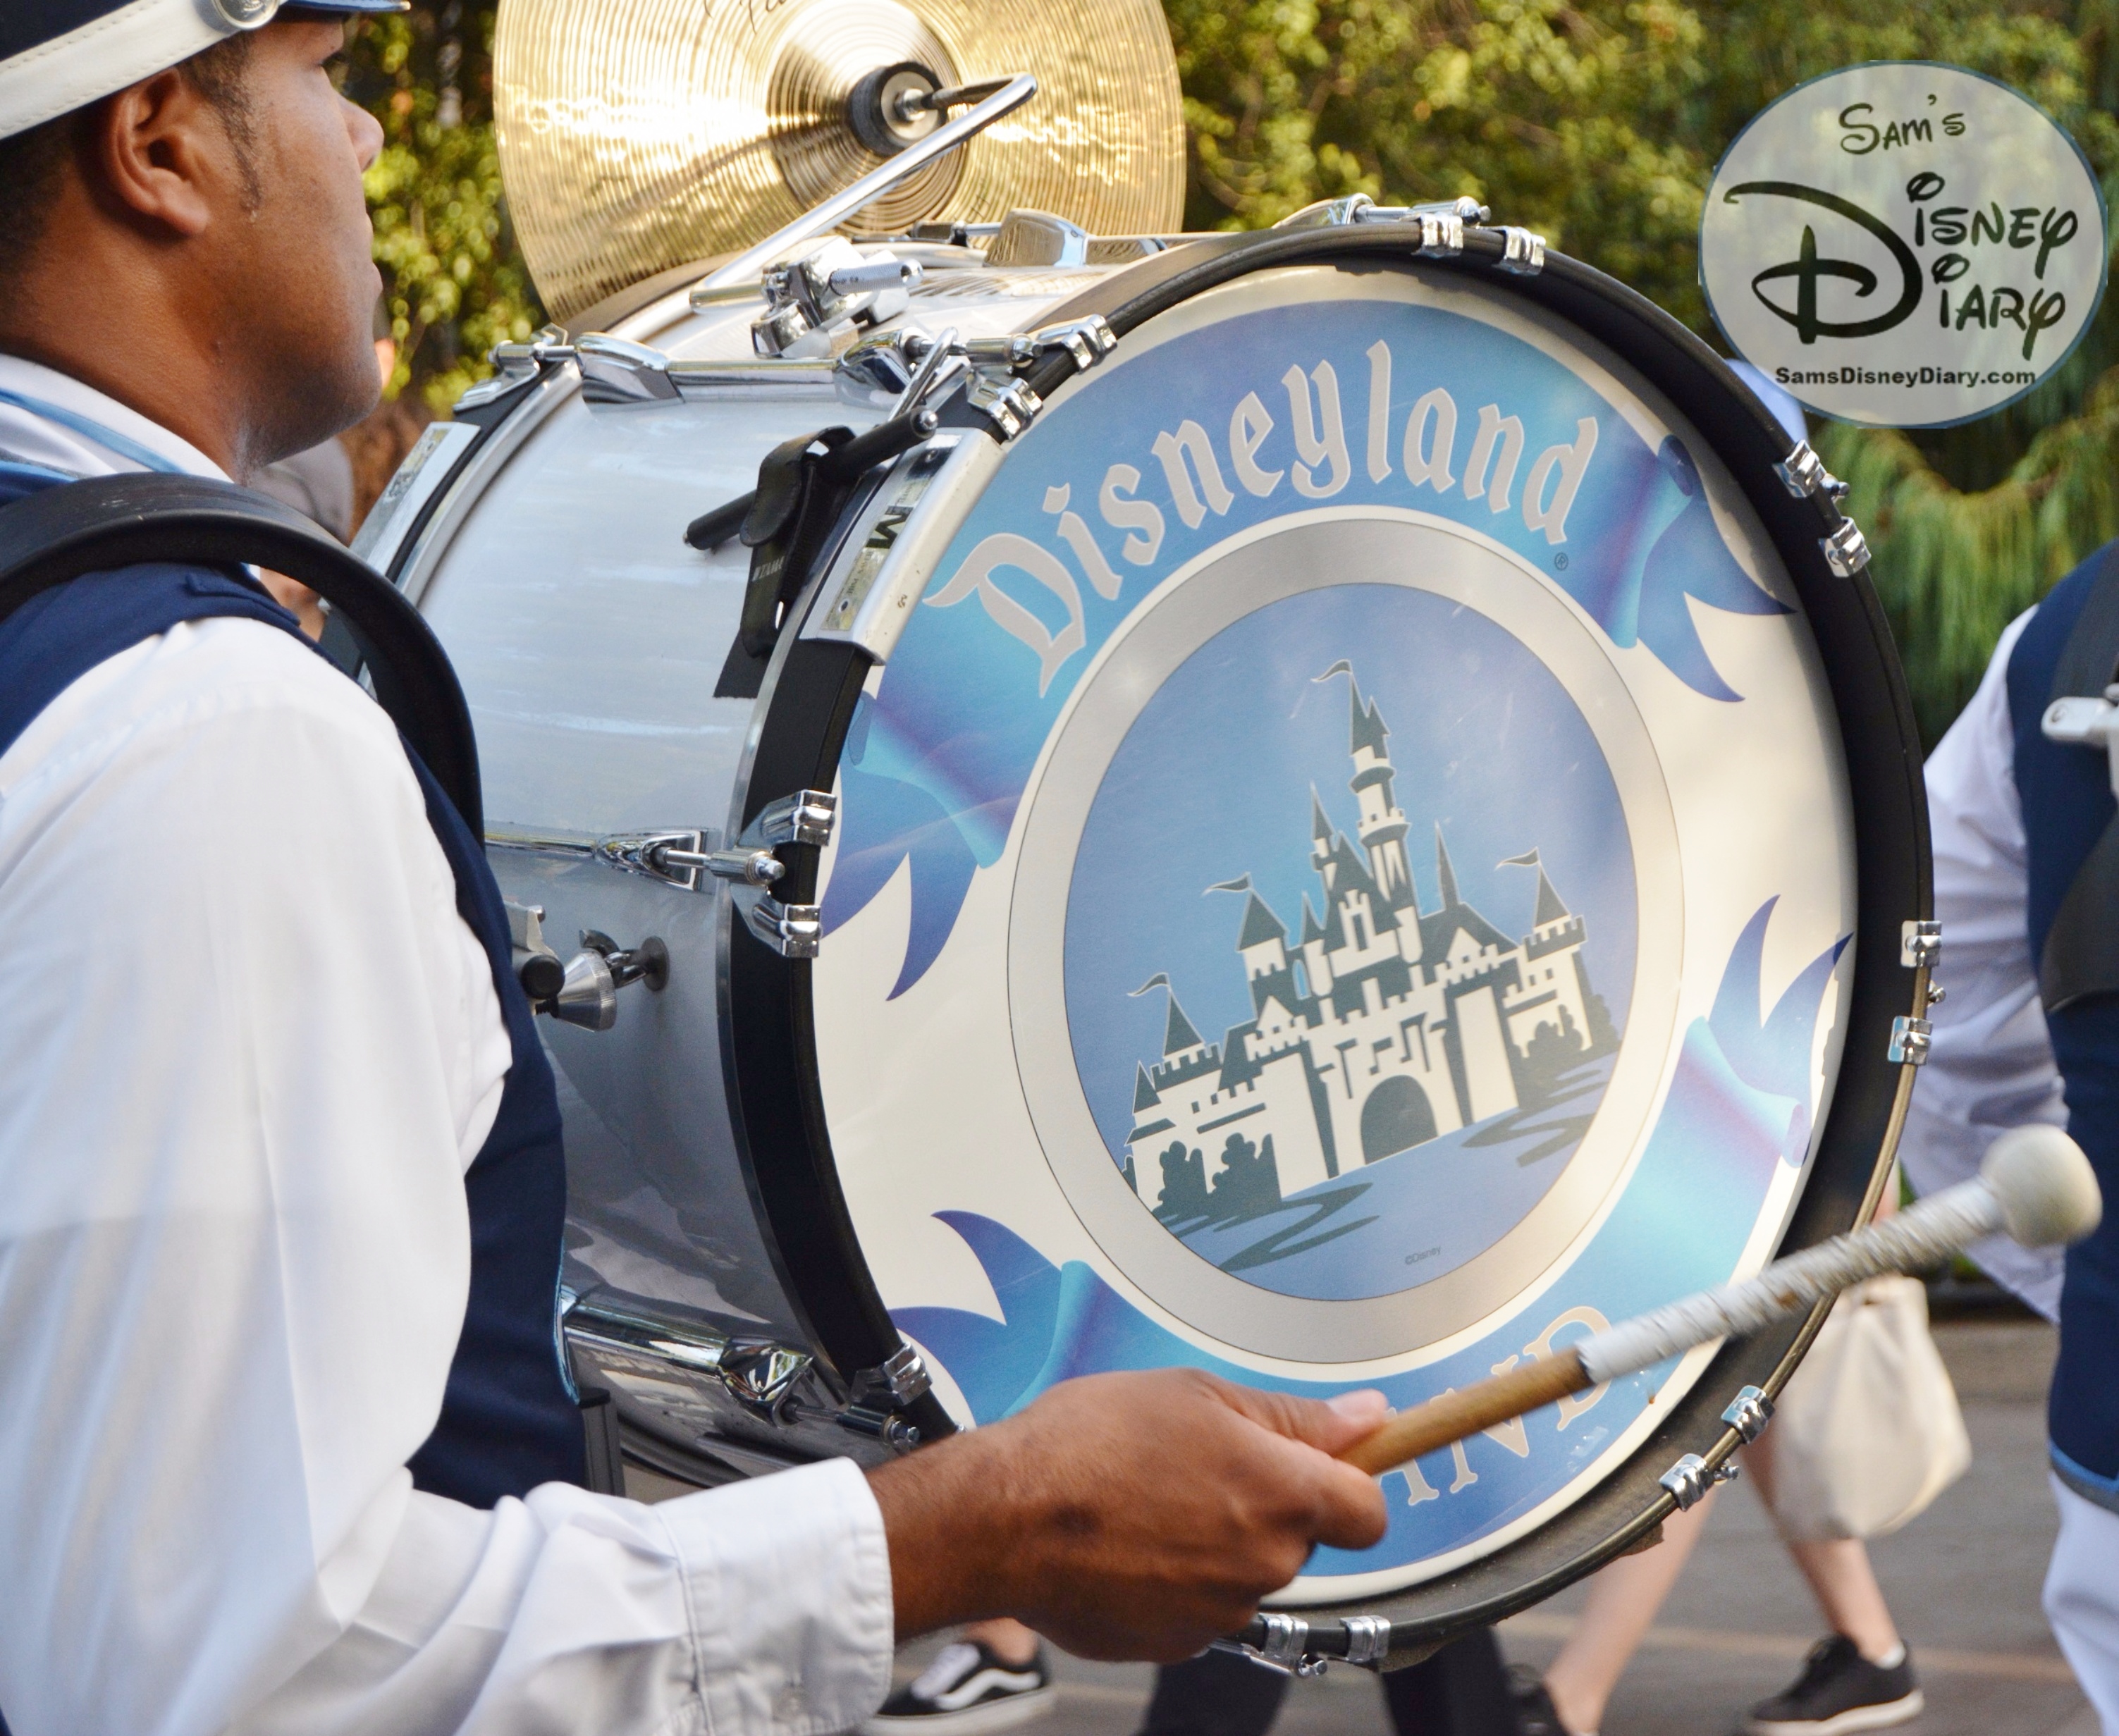 Sams Disney Diary Episode 98 - Rockin' with the Disneyland Band